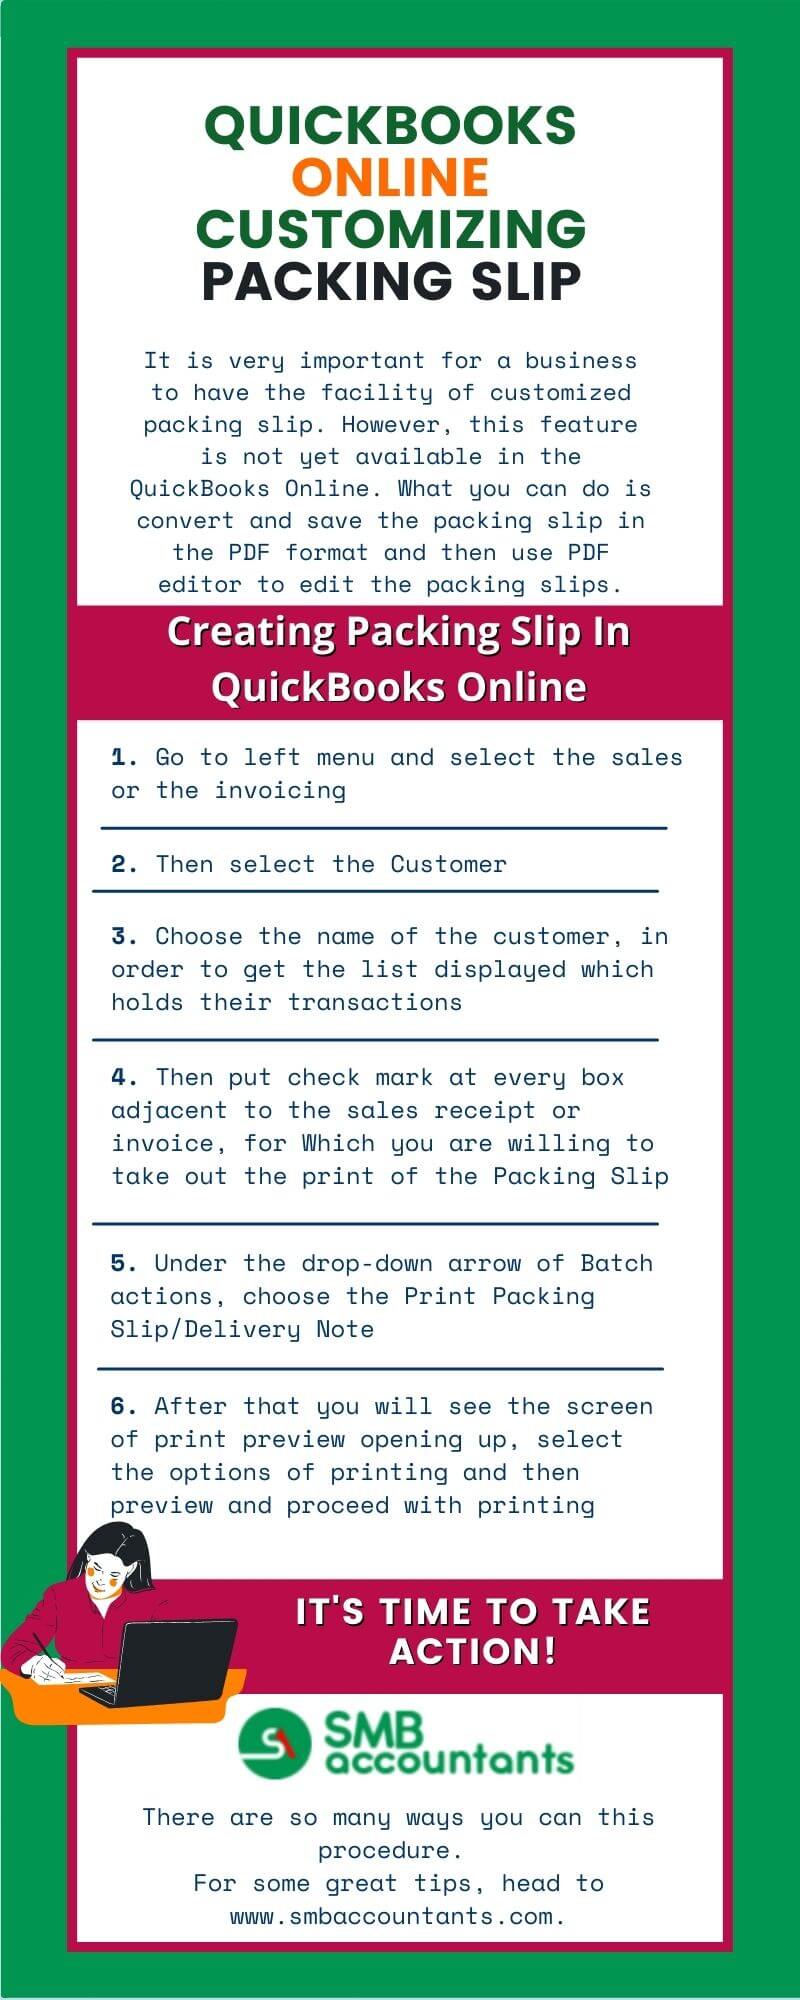 Infographic to QuickBooks Online Customizing Packing Slip